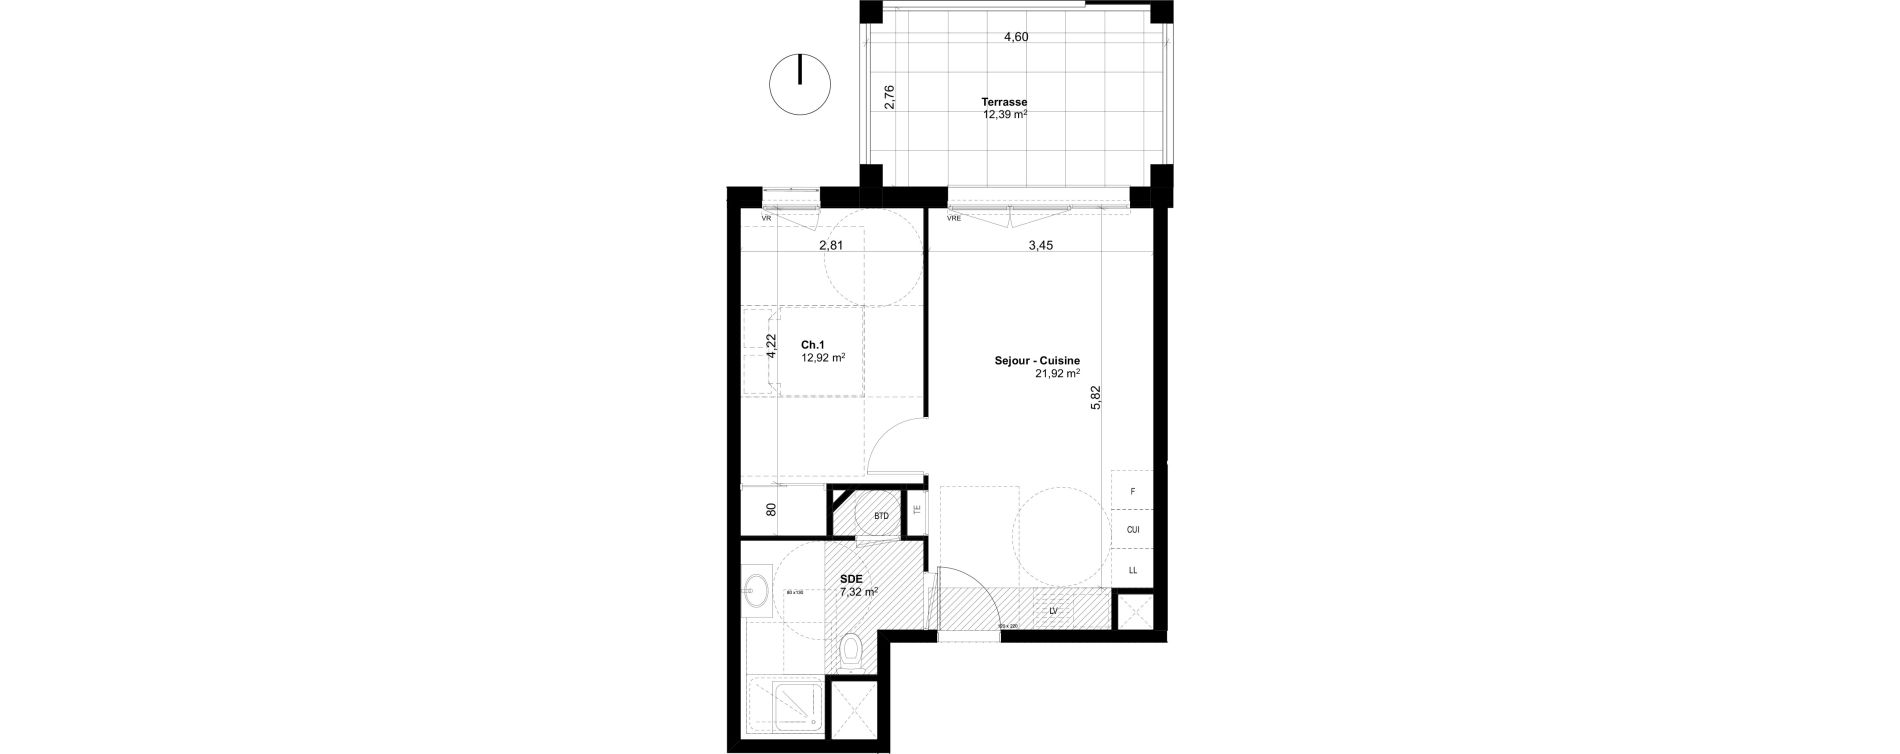 Appartement T2 de 42,16 m2 &agrave; Ventabren L heritiere